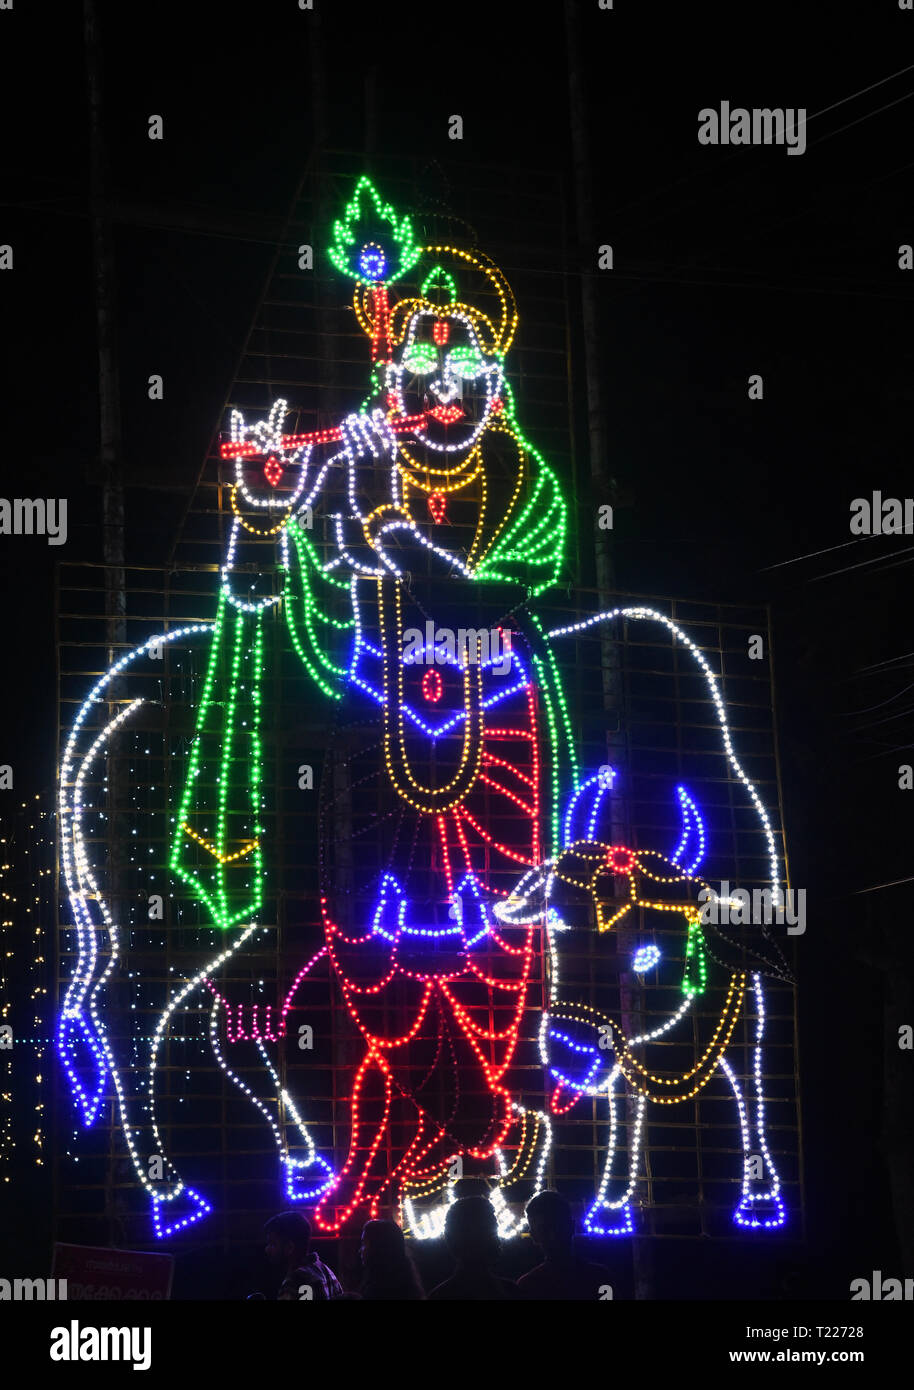 led light illumination of lord krishna and cow,india Stock Photo